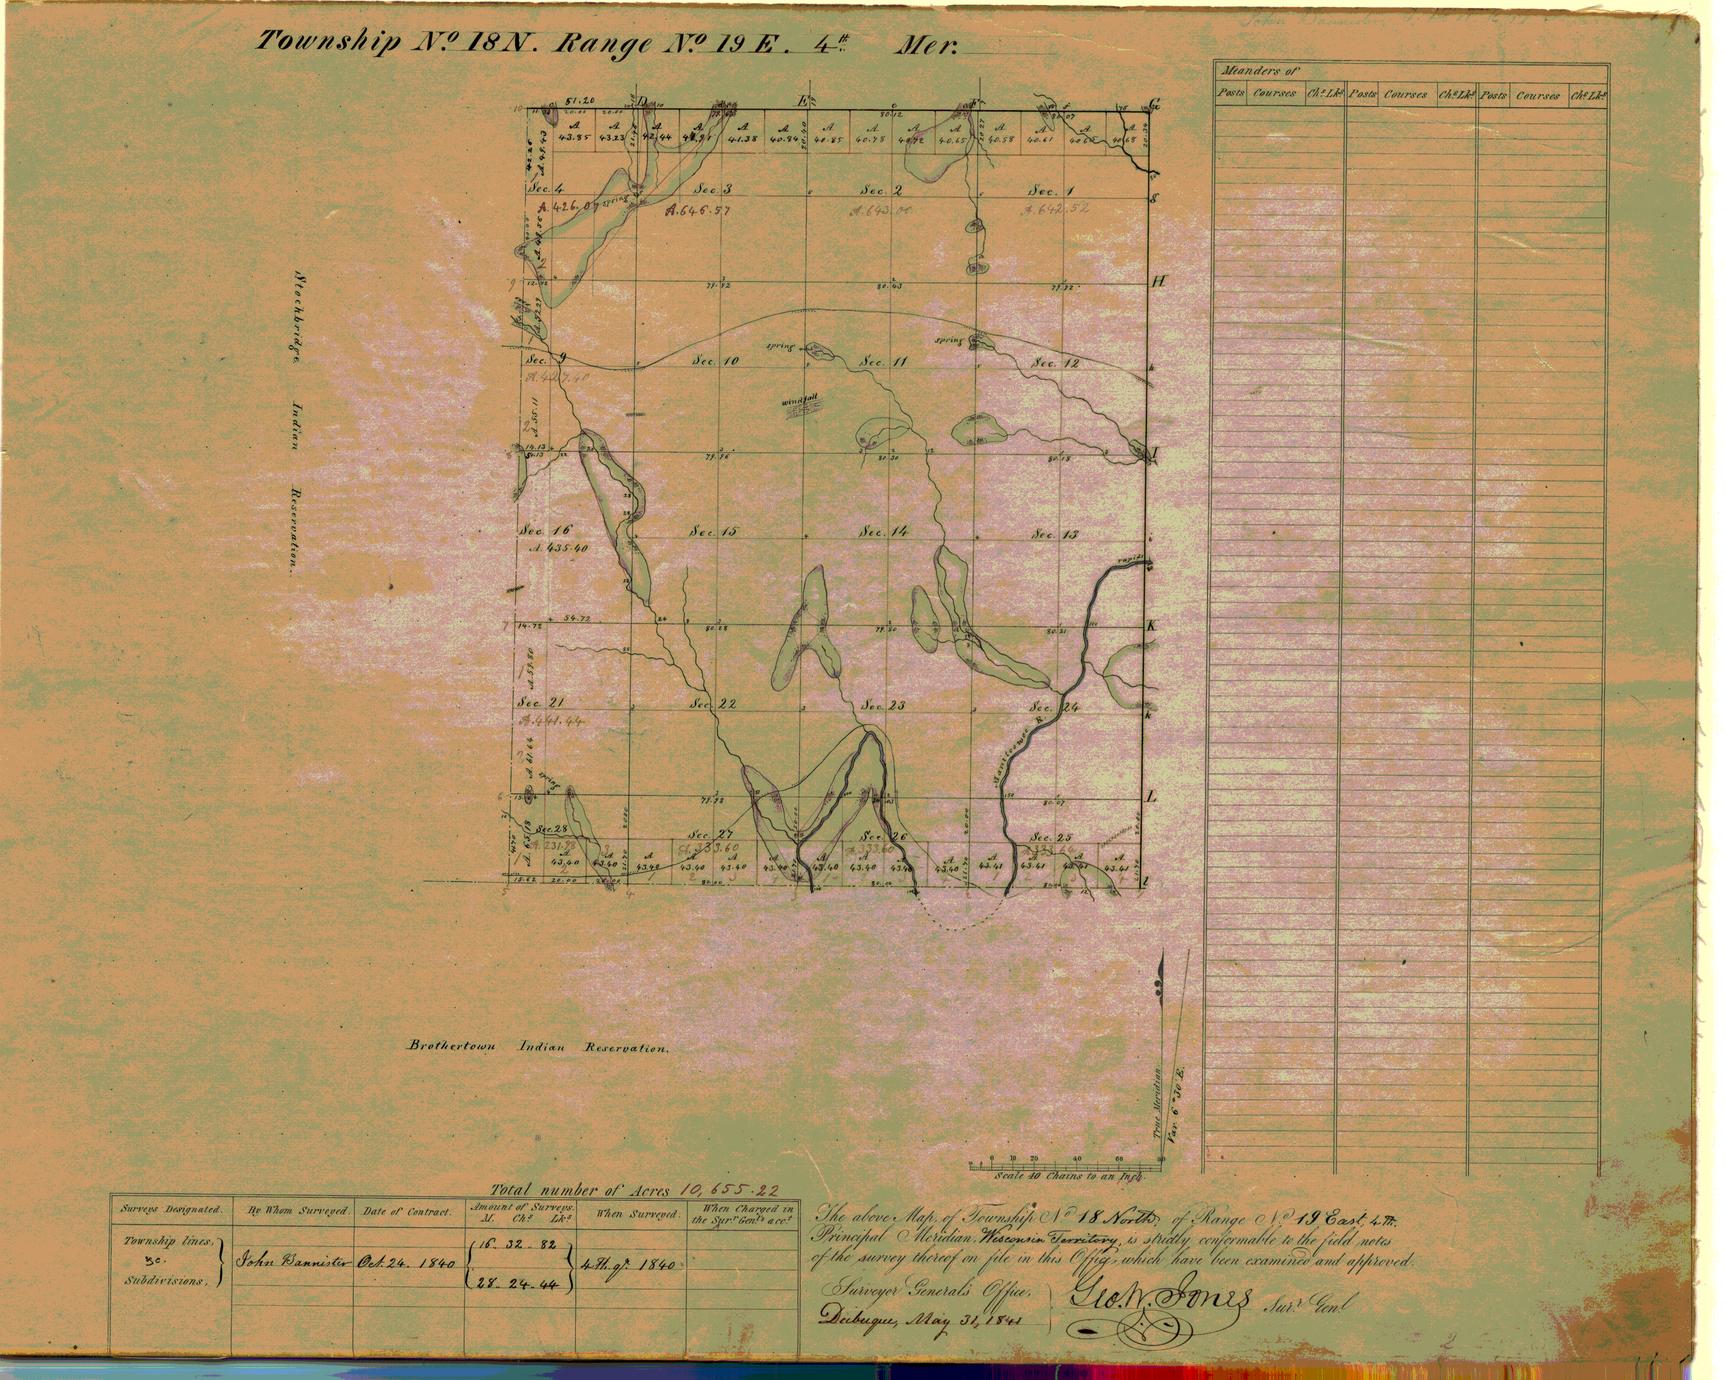 [Public Land Survey System map: Wisconsin Township 18 North, Range 19 East]